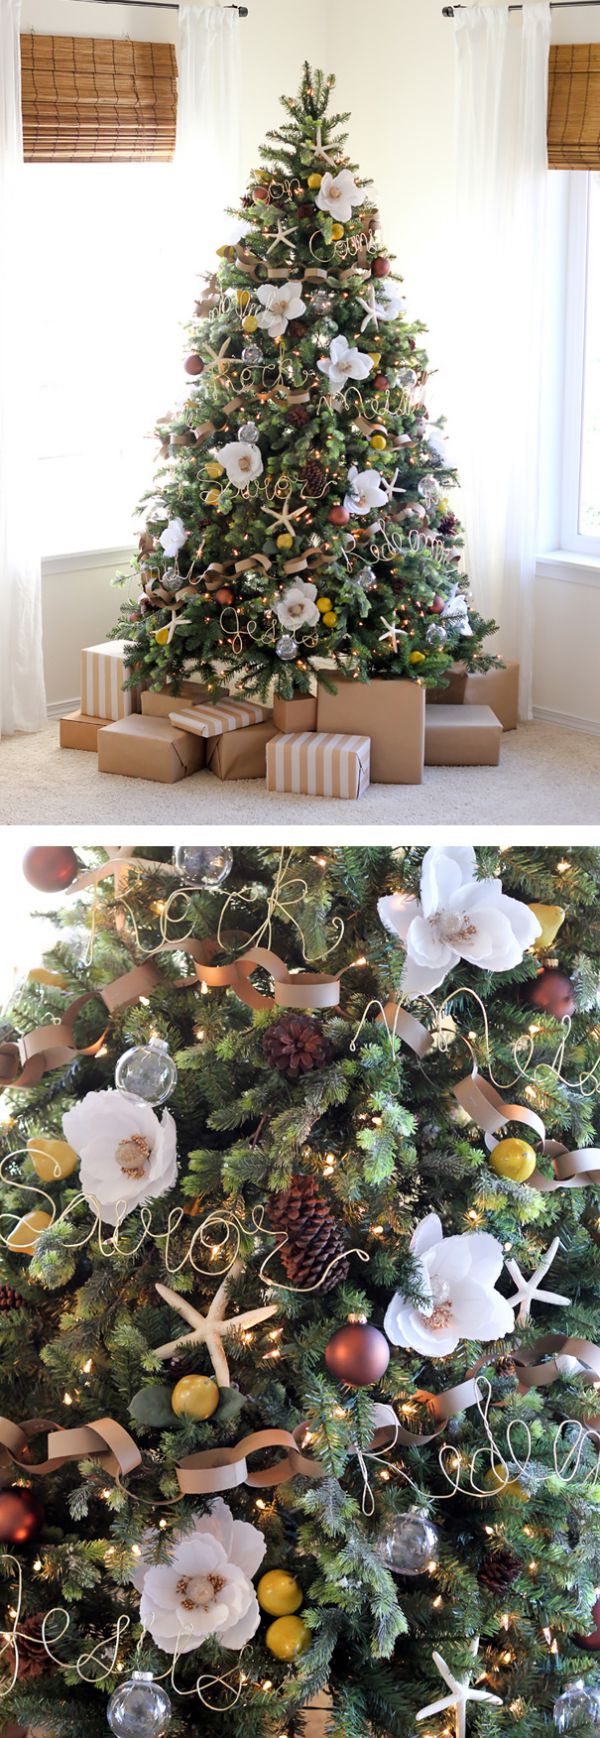 floral-christmas-tree-decorating-ideas-29__605.jpg (235.52 Kb)